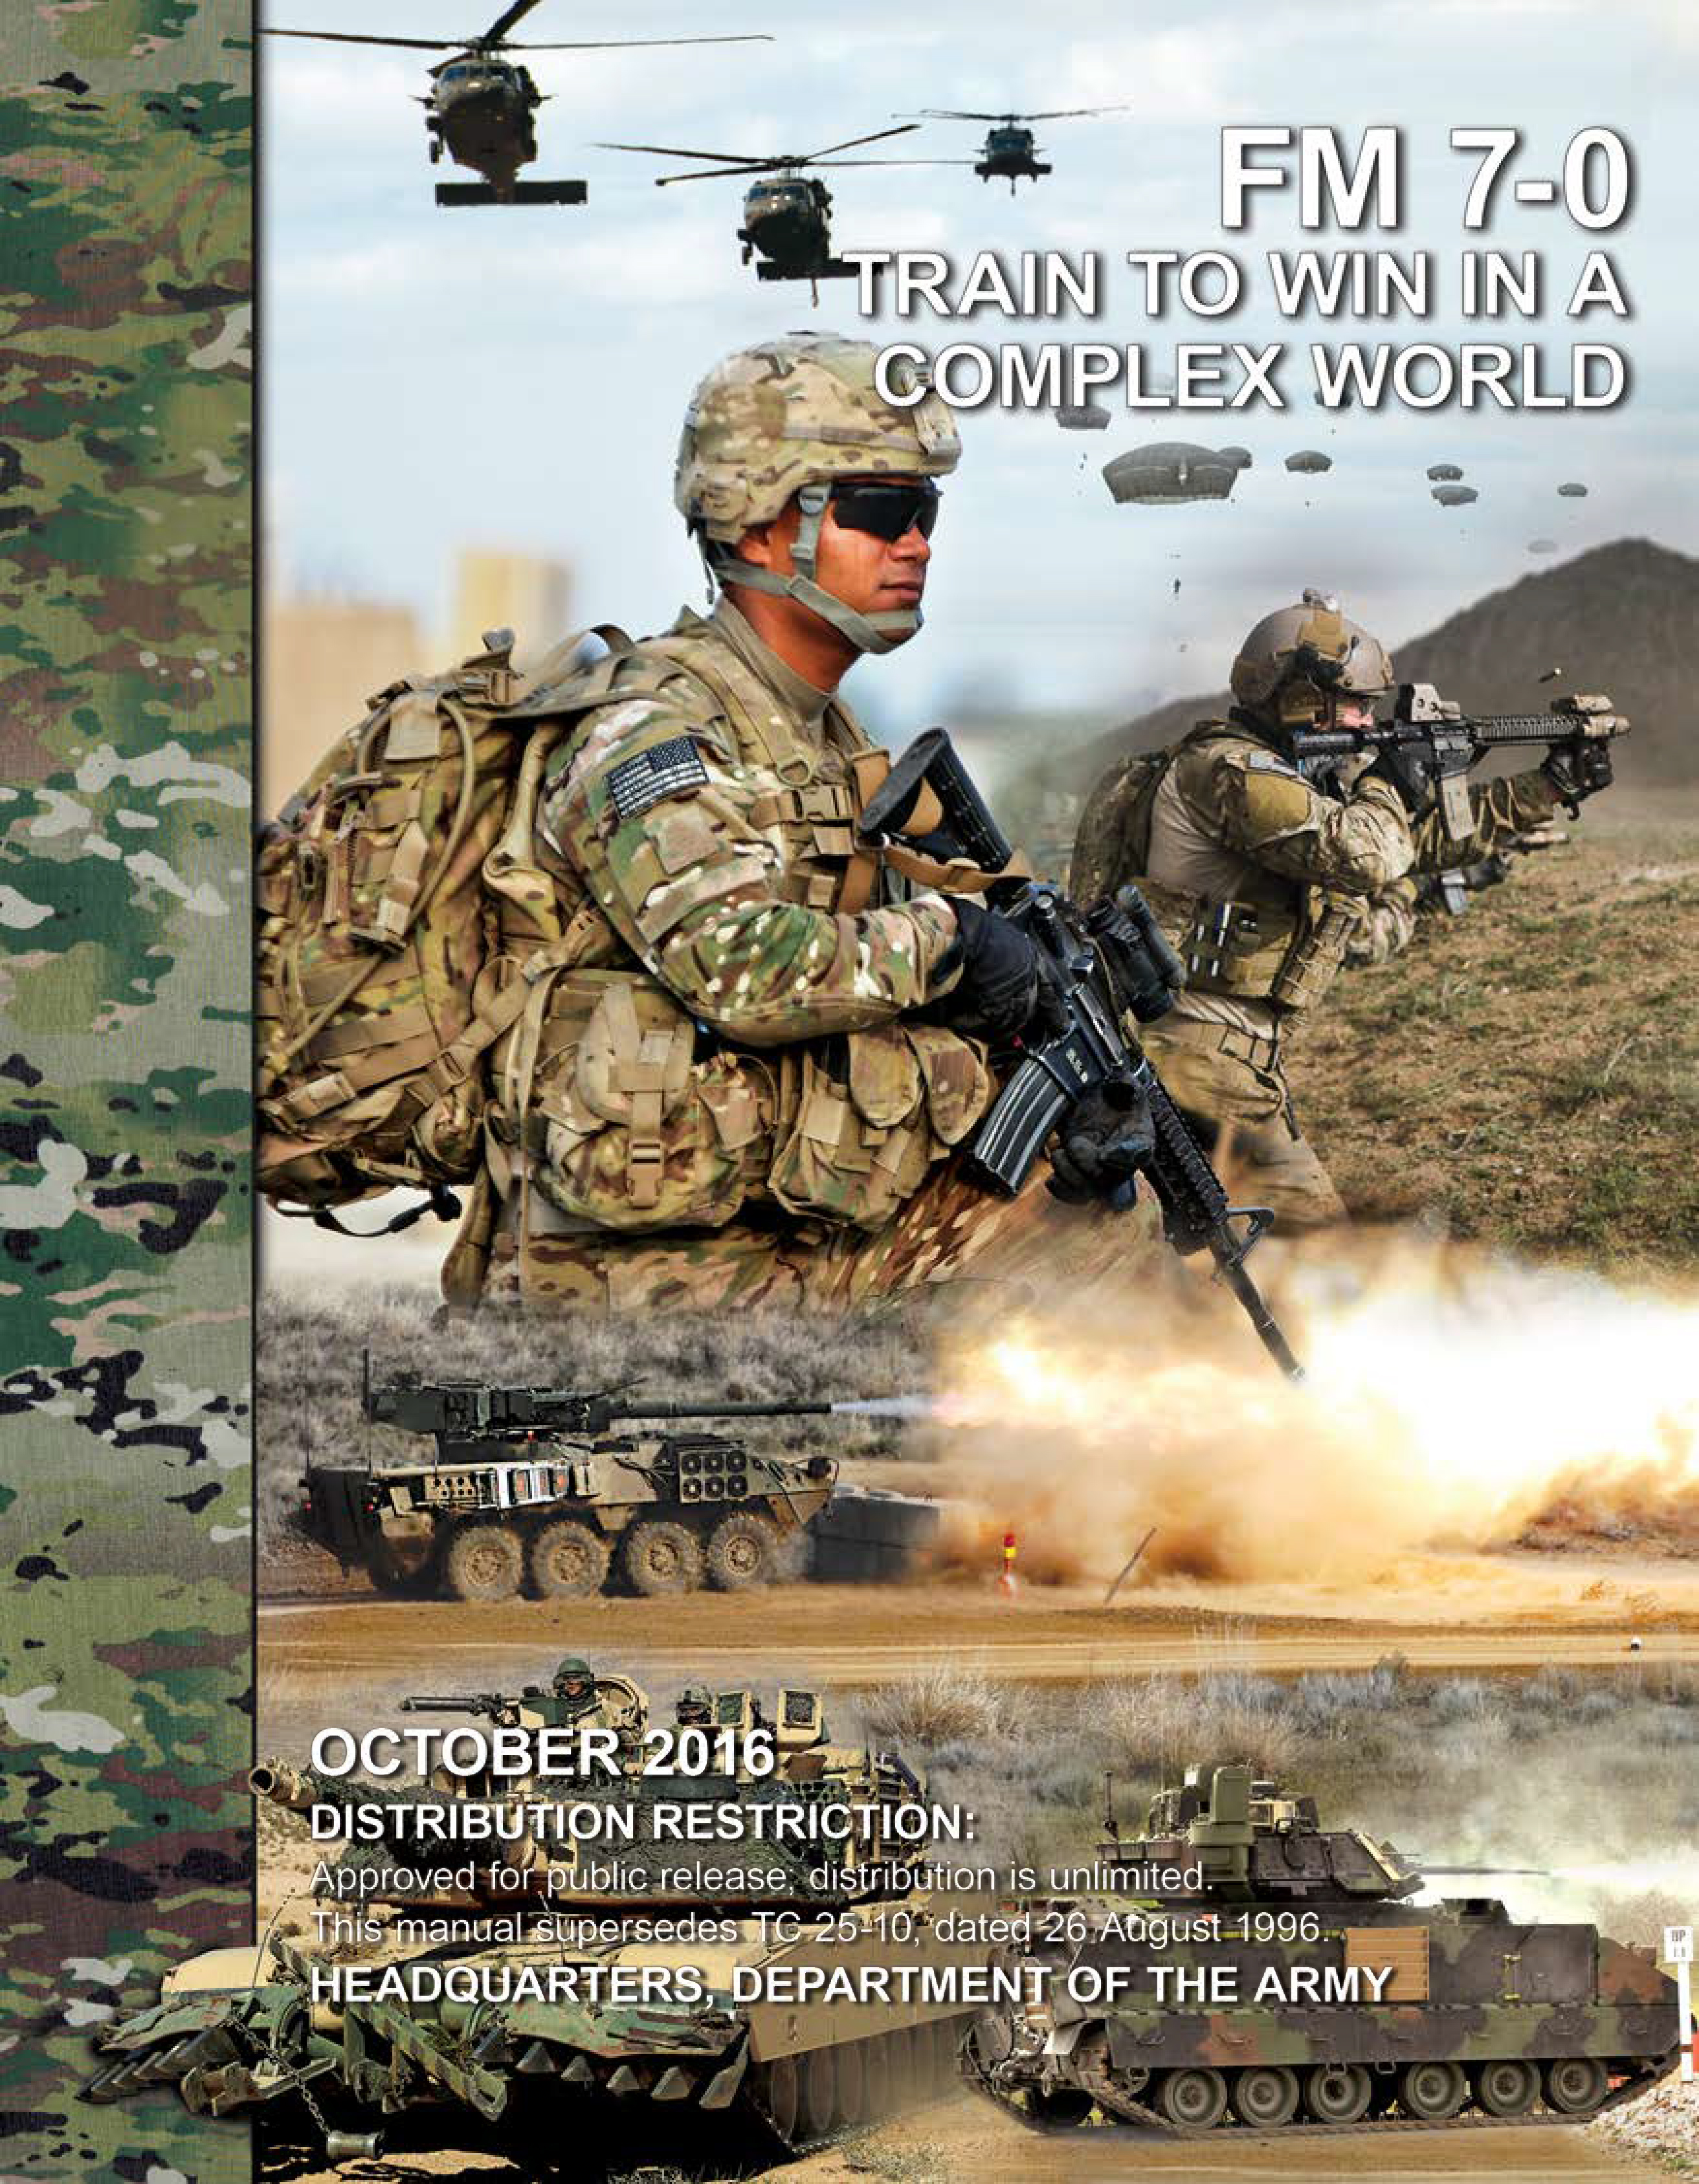 The US Army Leadership Field Manual